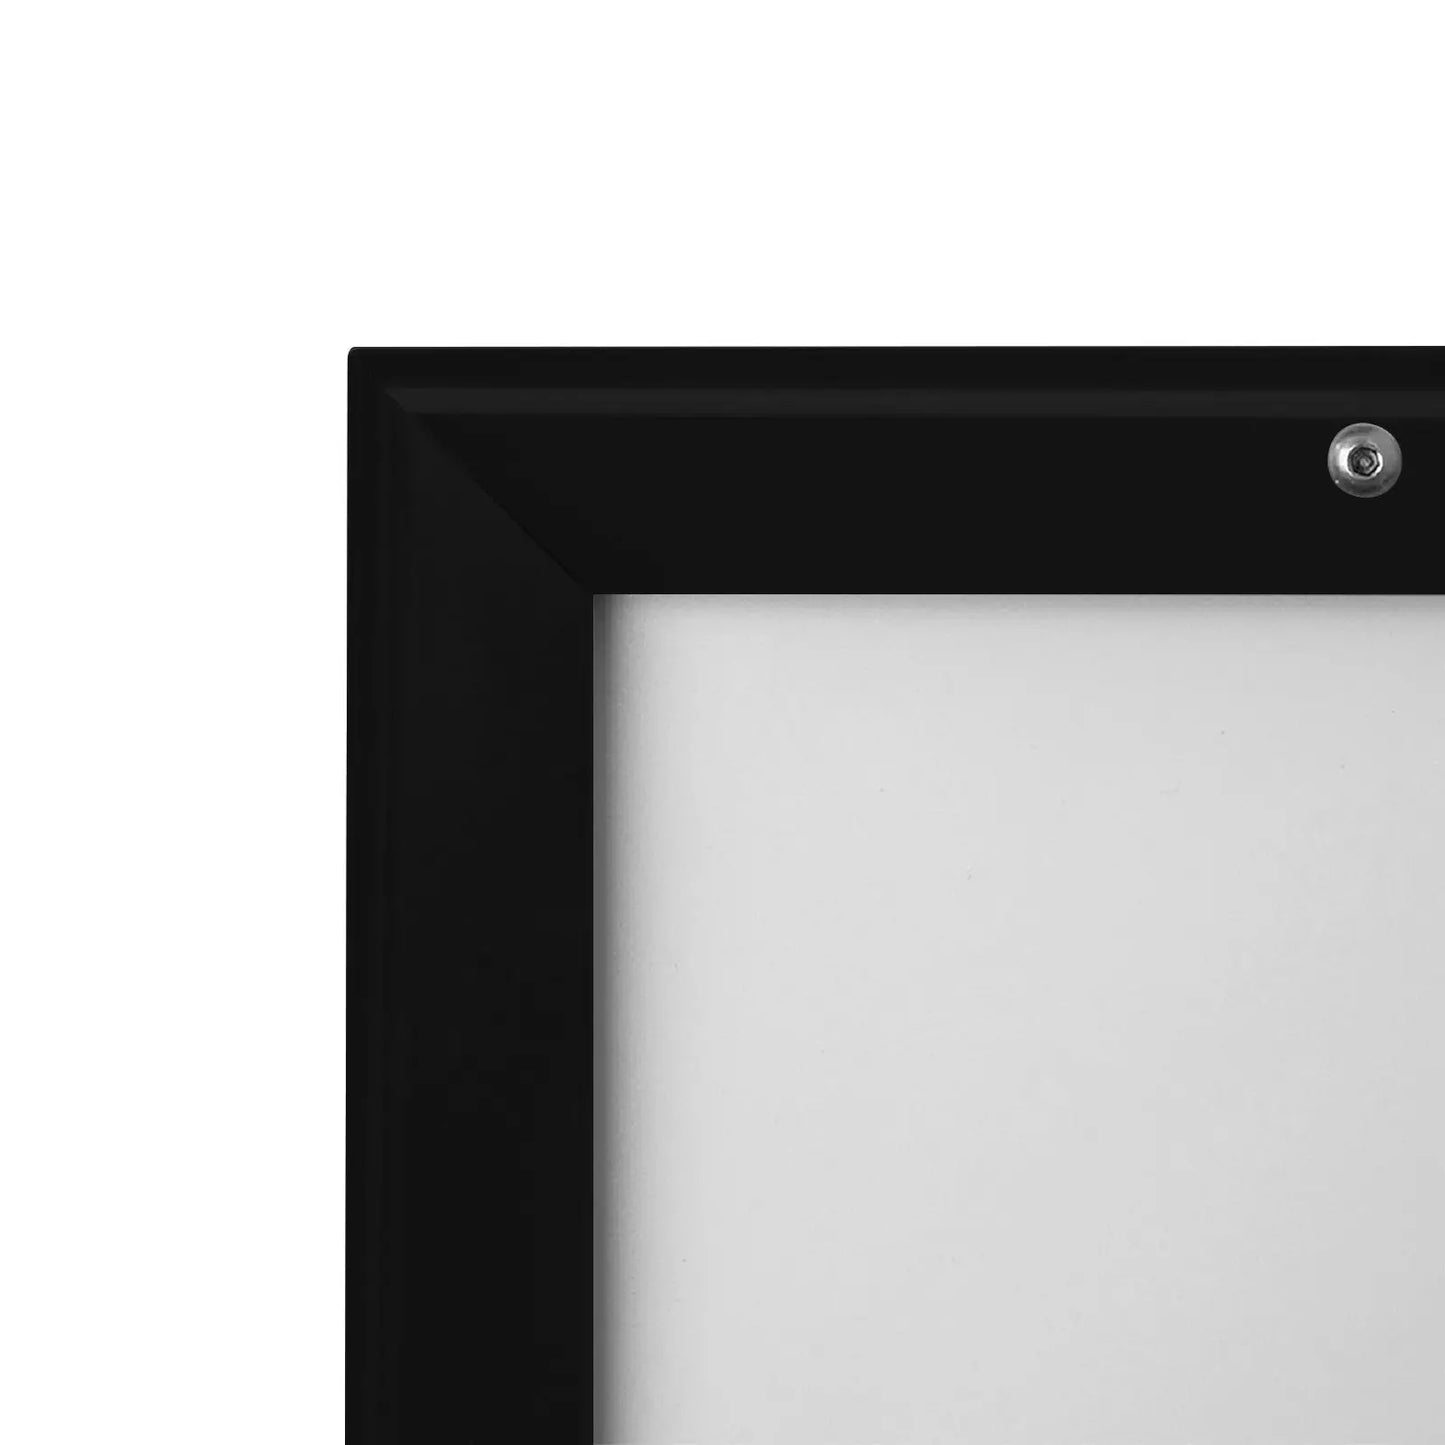 Black locking snap frame poster size 11X17 - 1.25 inch profile - Snap Frames Direct